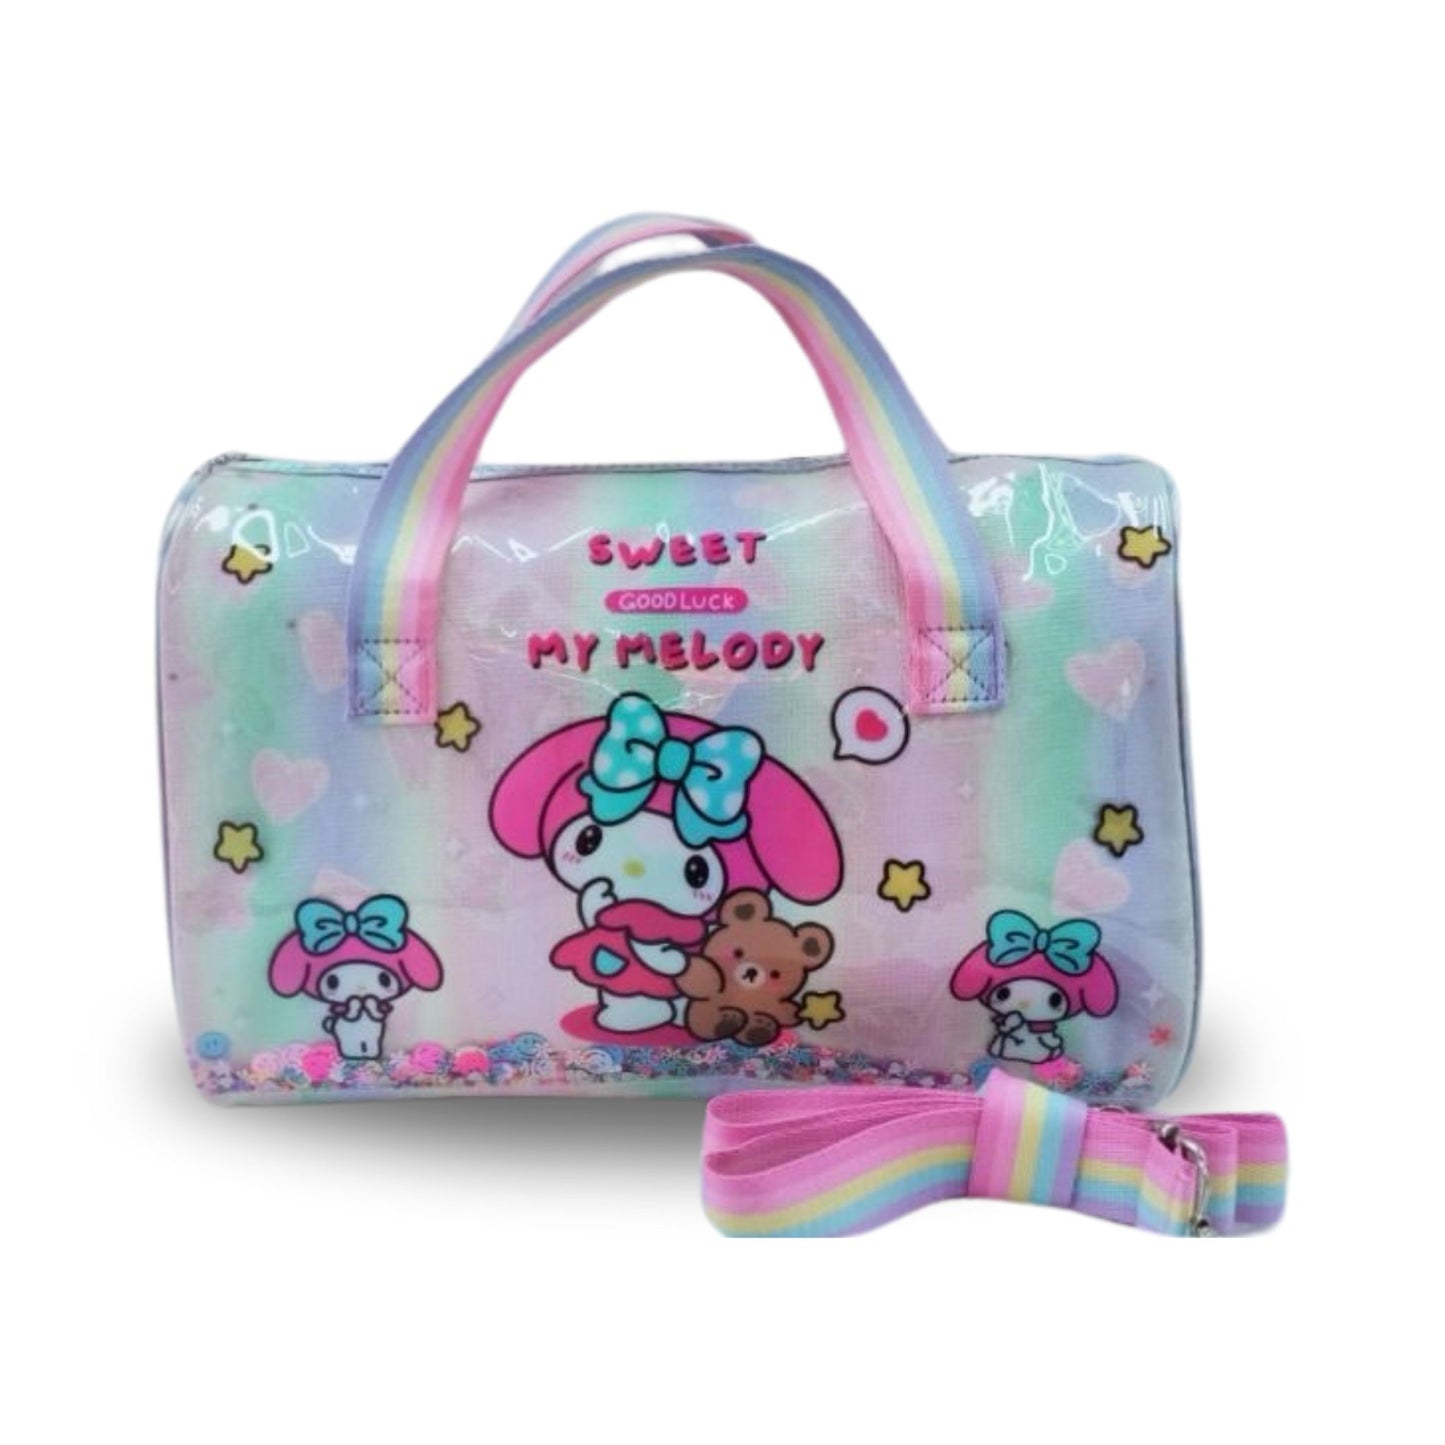 A1795 Hello Kitty Kids Duffel Bag